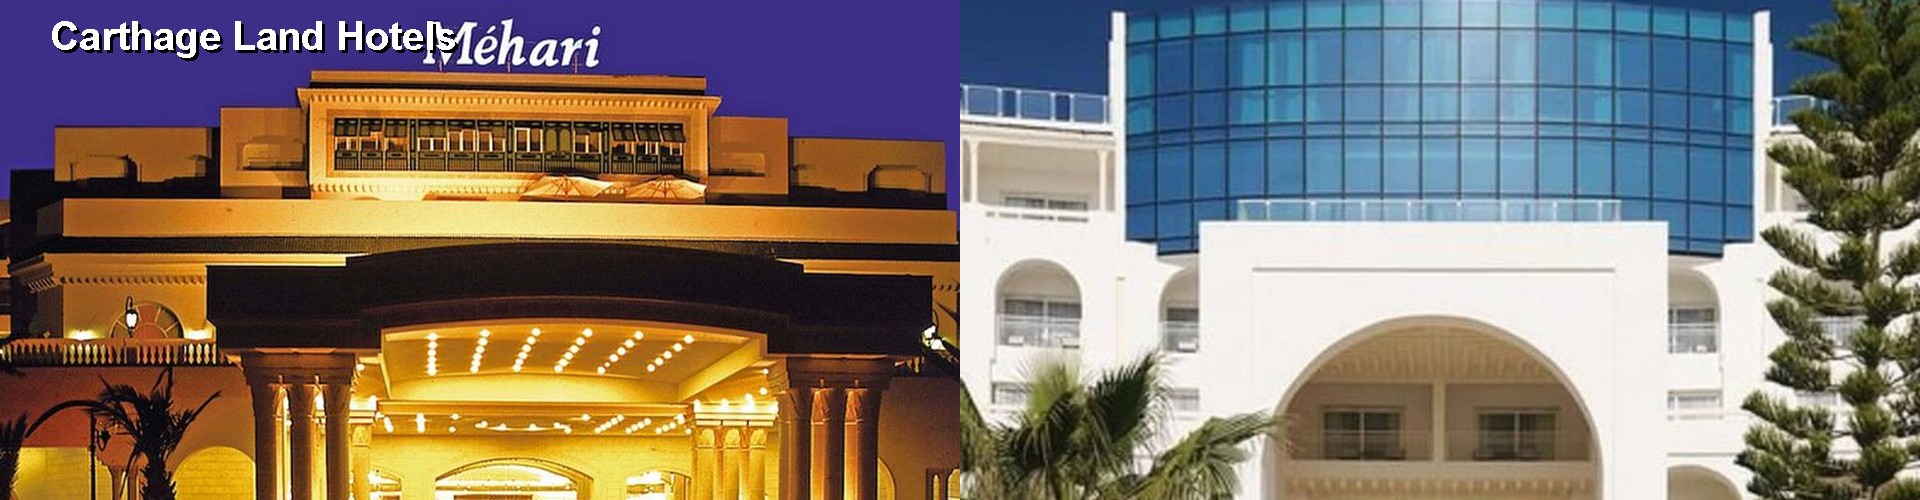 5 Best Hotels near Carthage Land